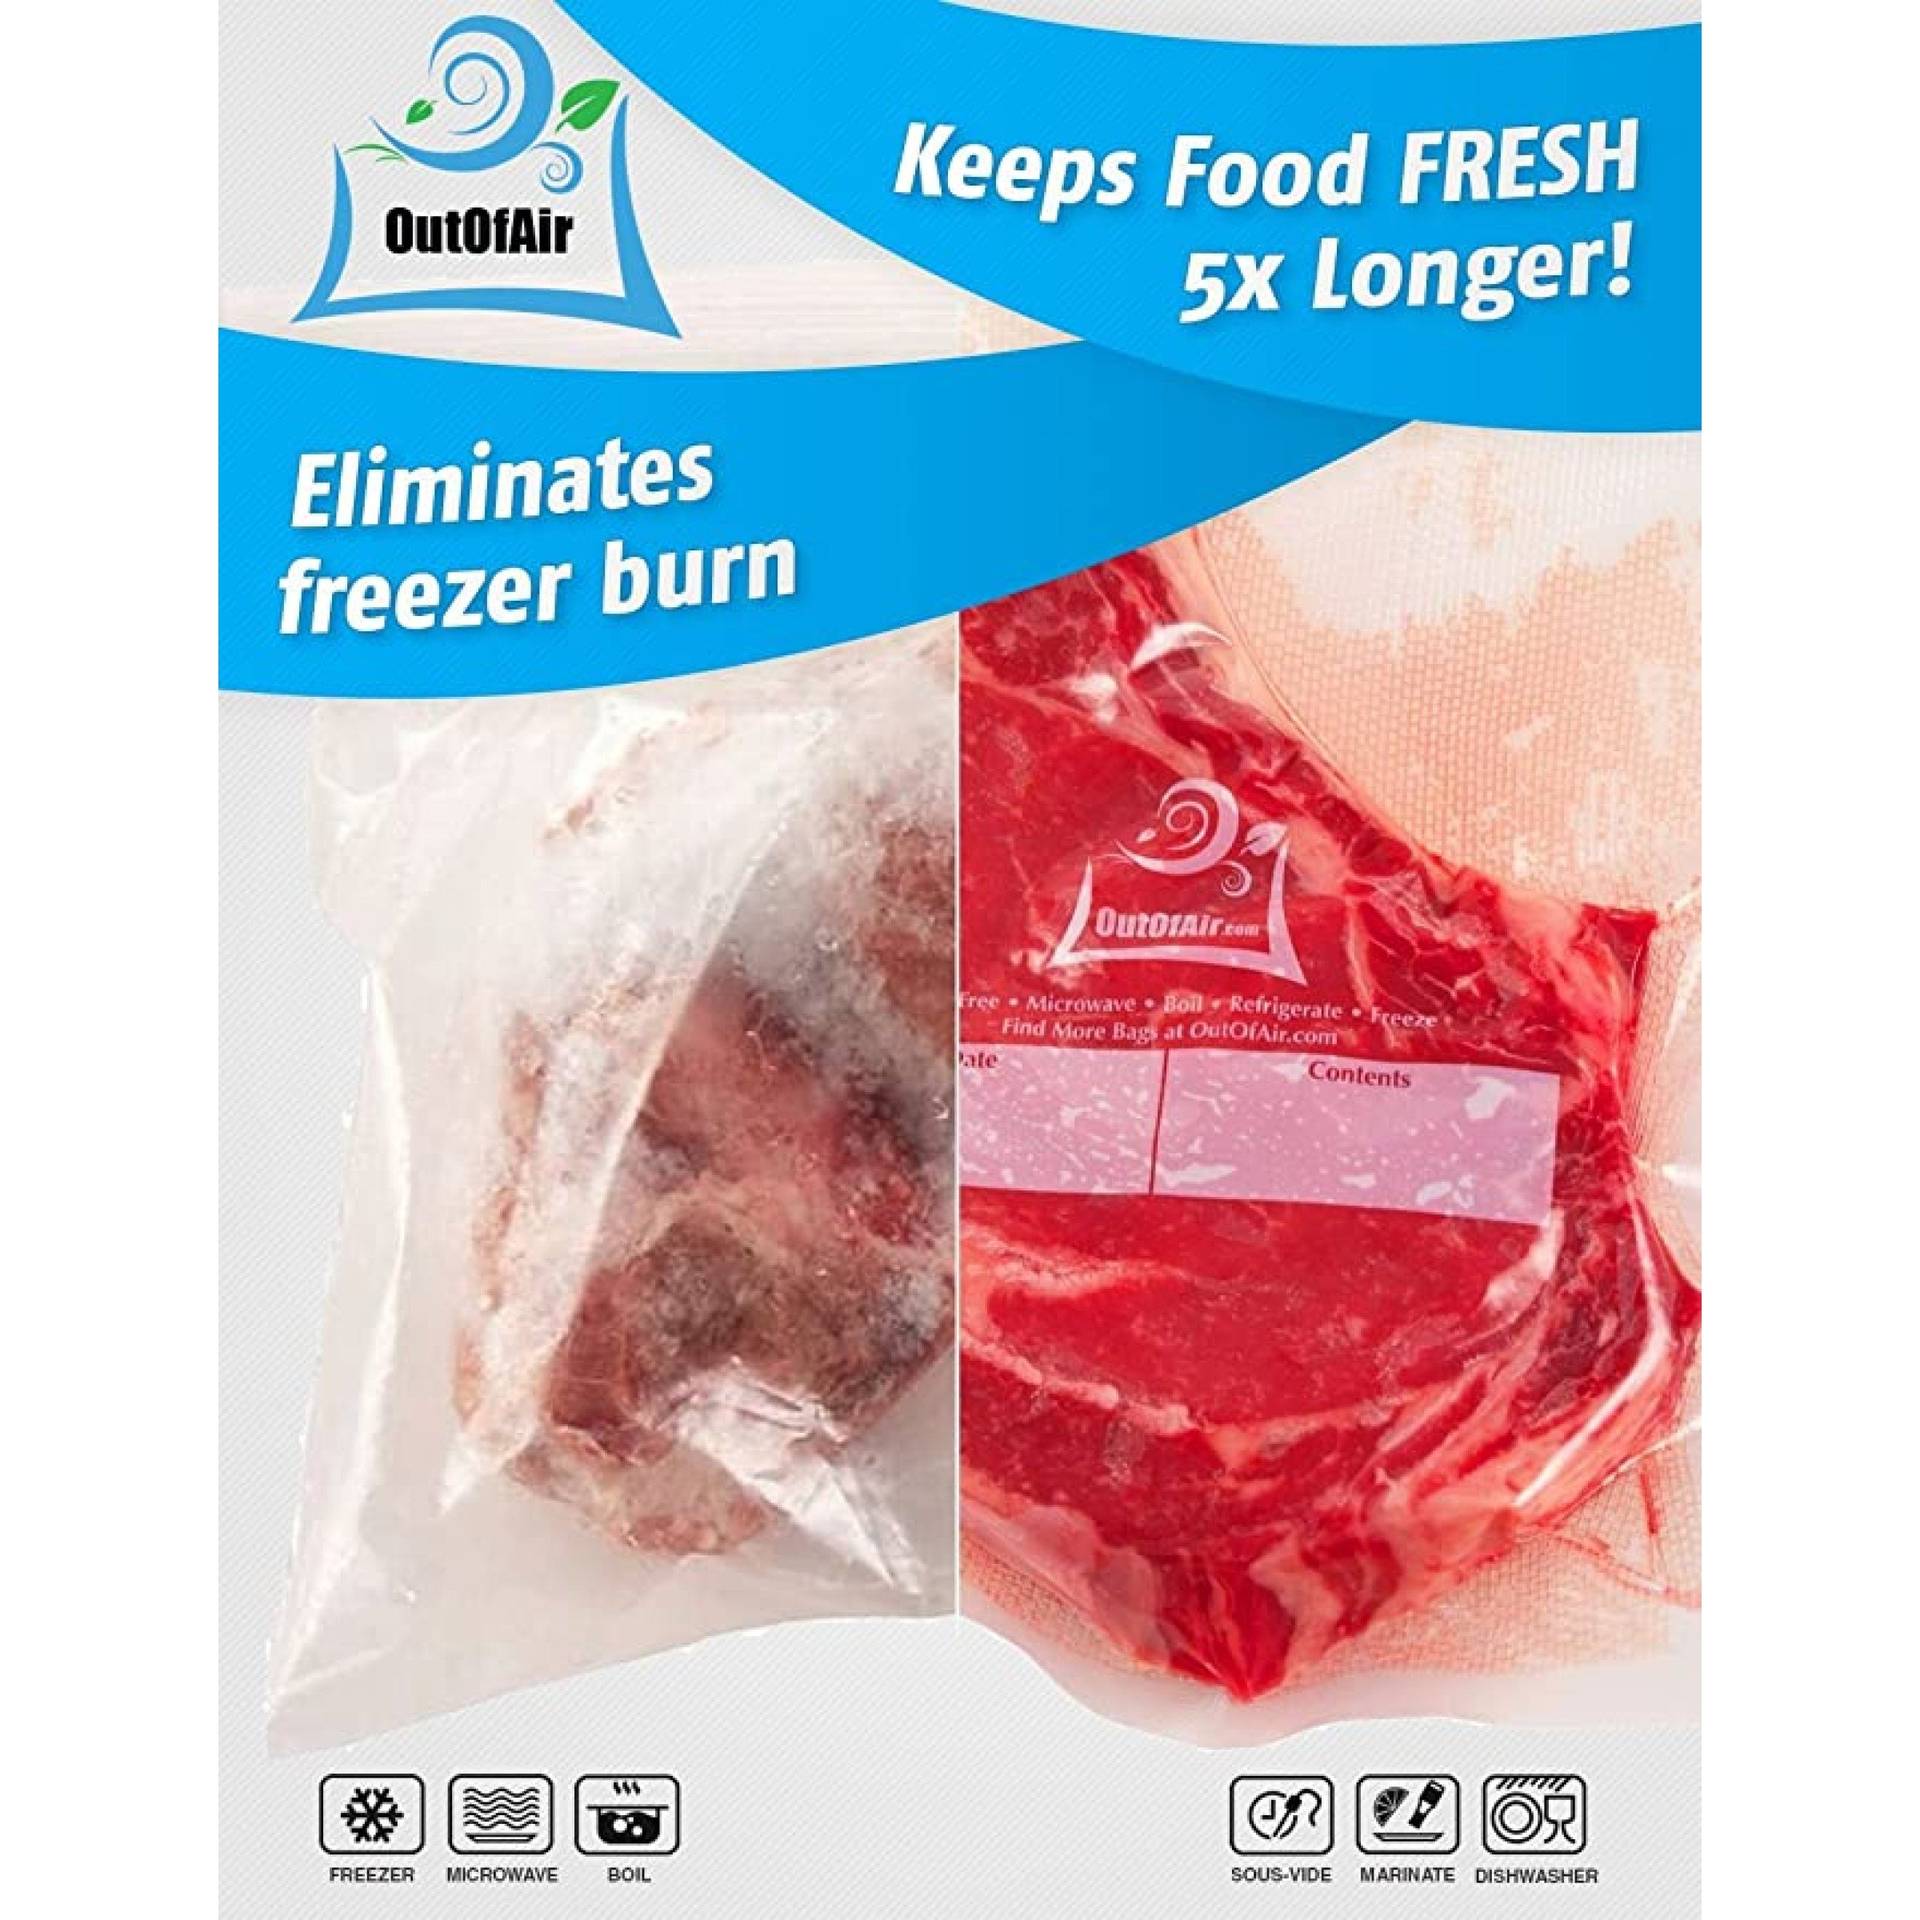 OutOfAir keep food fresh 5 times longer, eliminates freezer burn